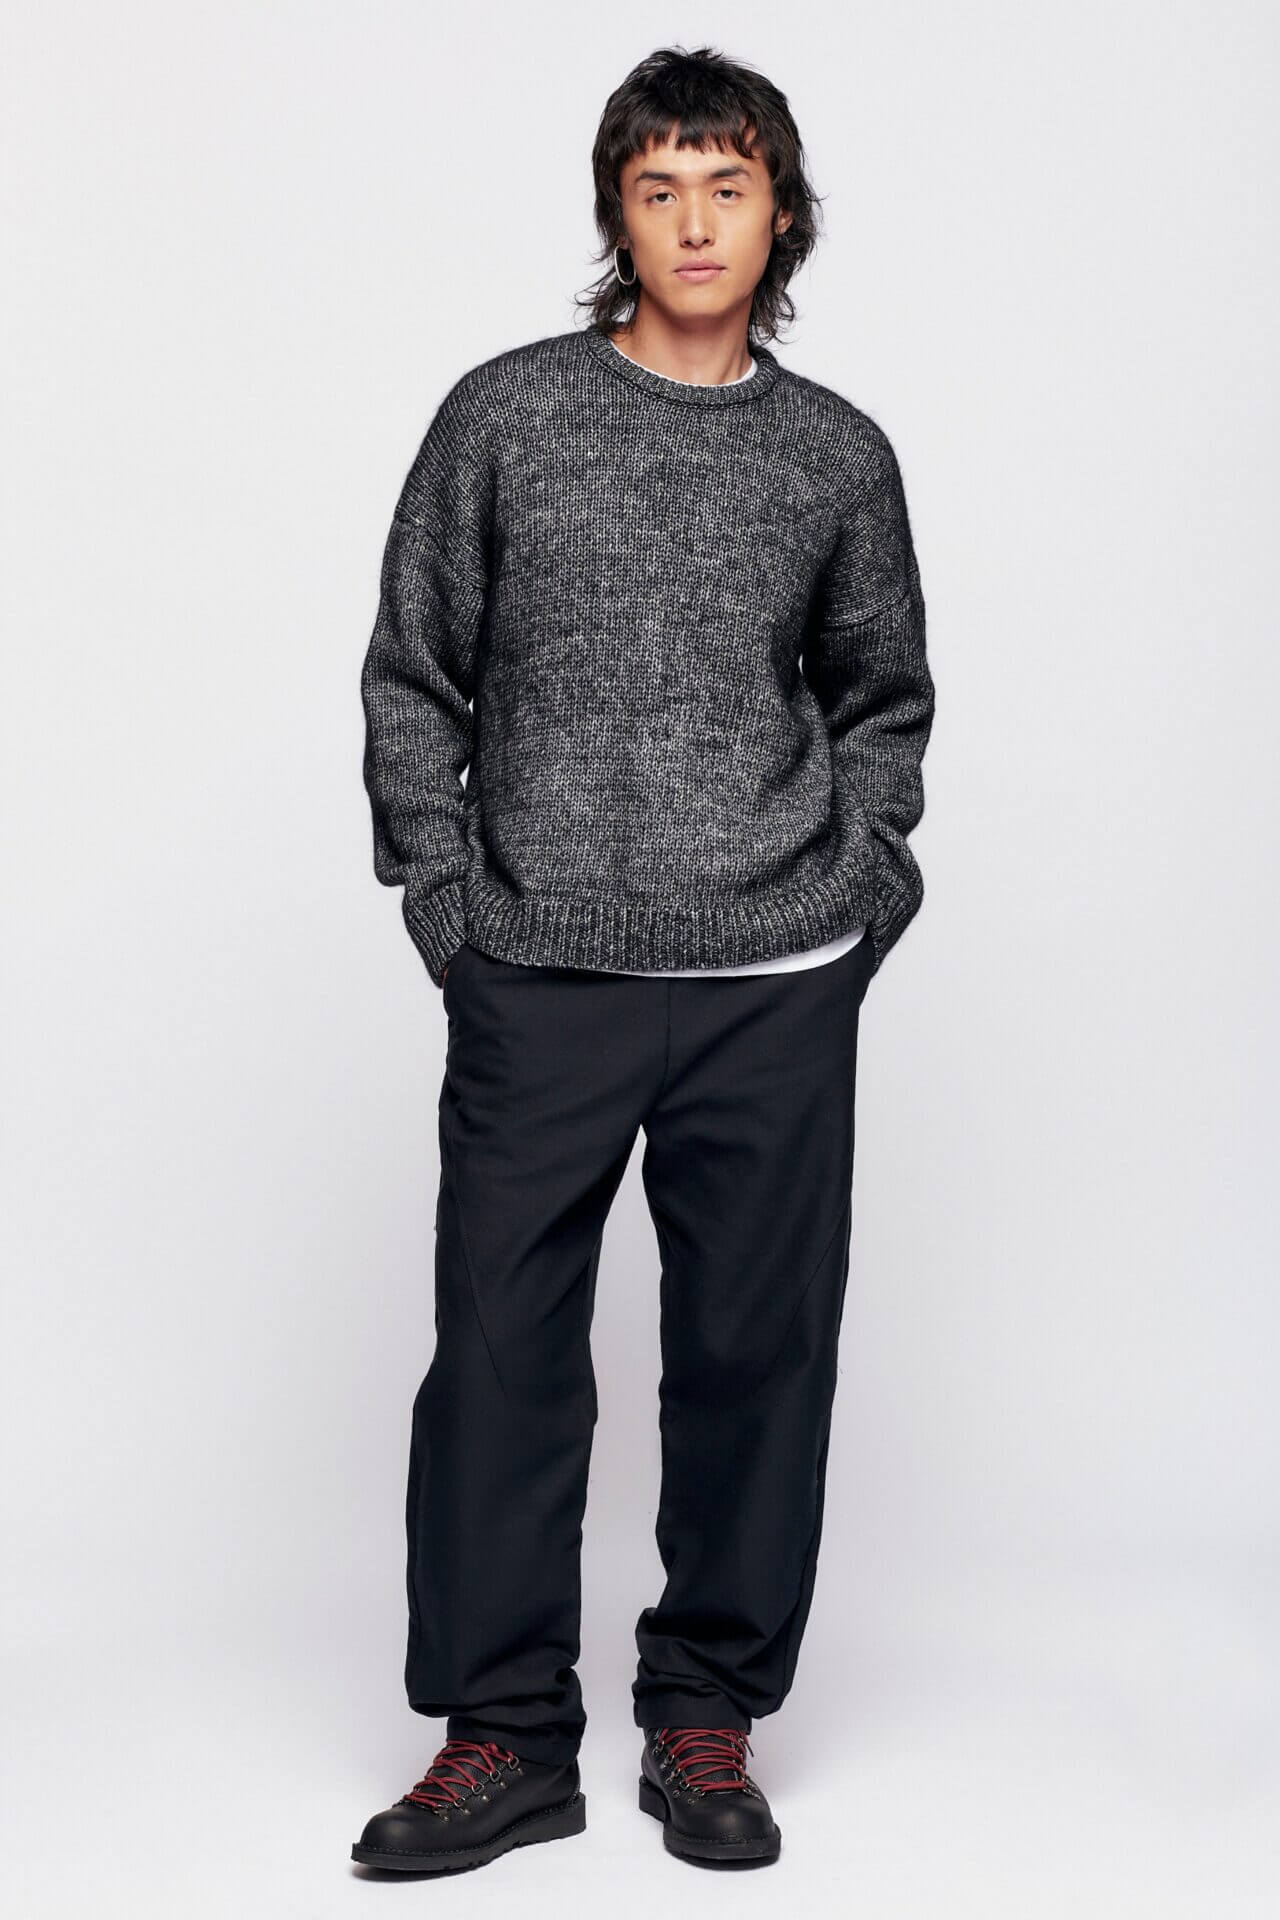 Kotn Men's Kilimanjaro Fuzzy Sweater in Black | Eco-Stylist